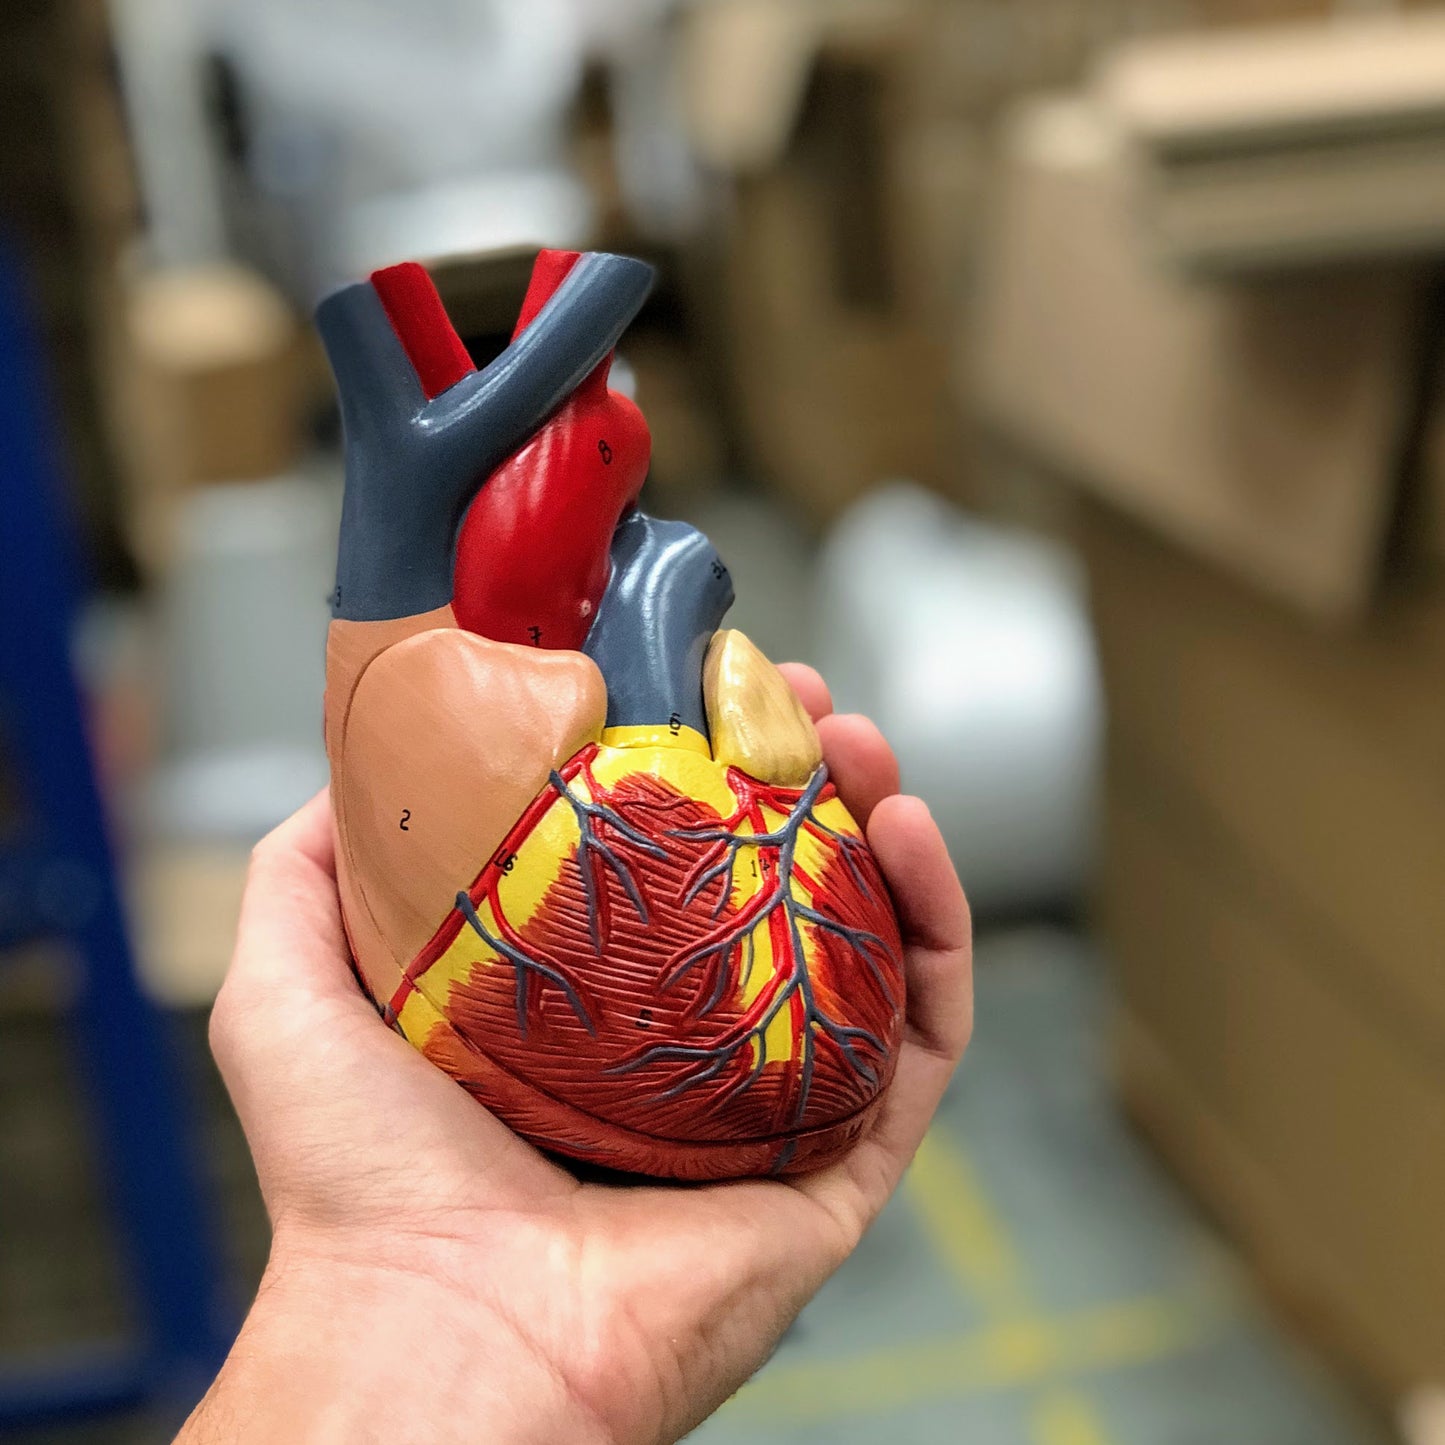 Klassisk hjärtmodell i realistisk storlek